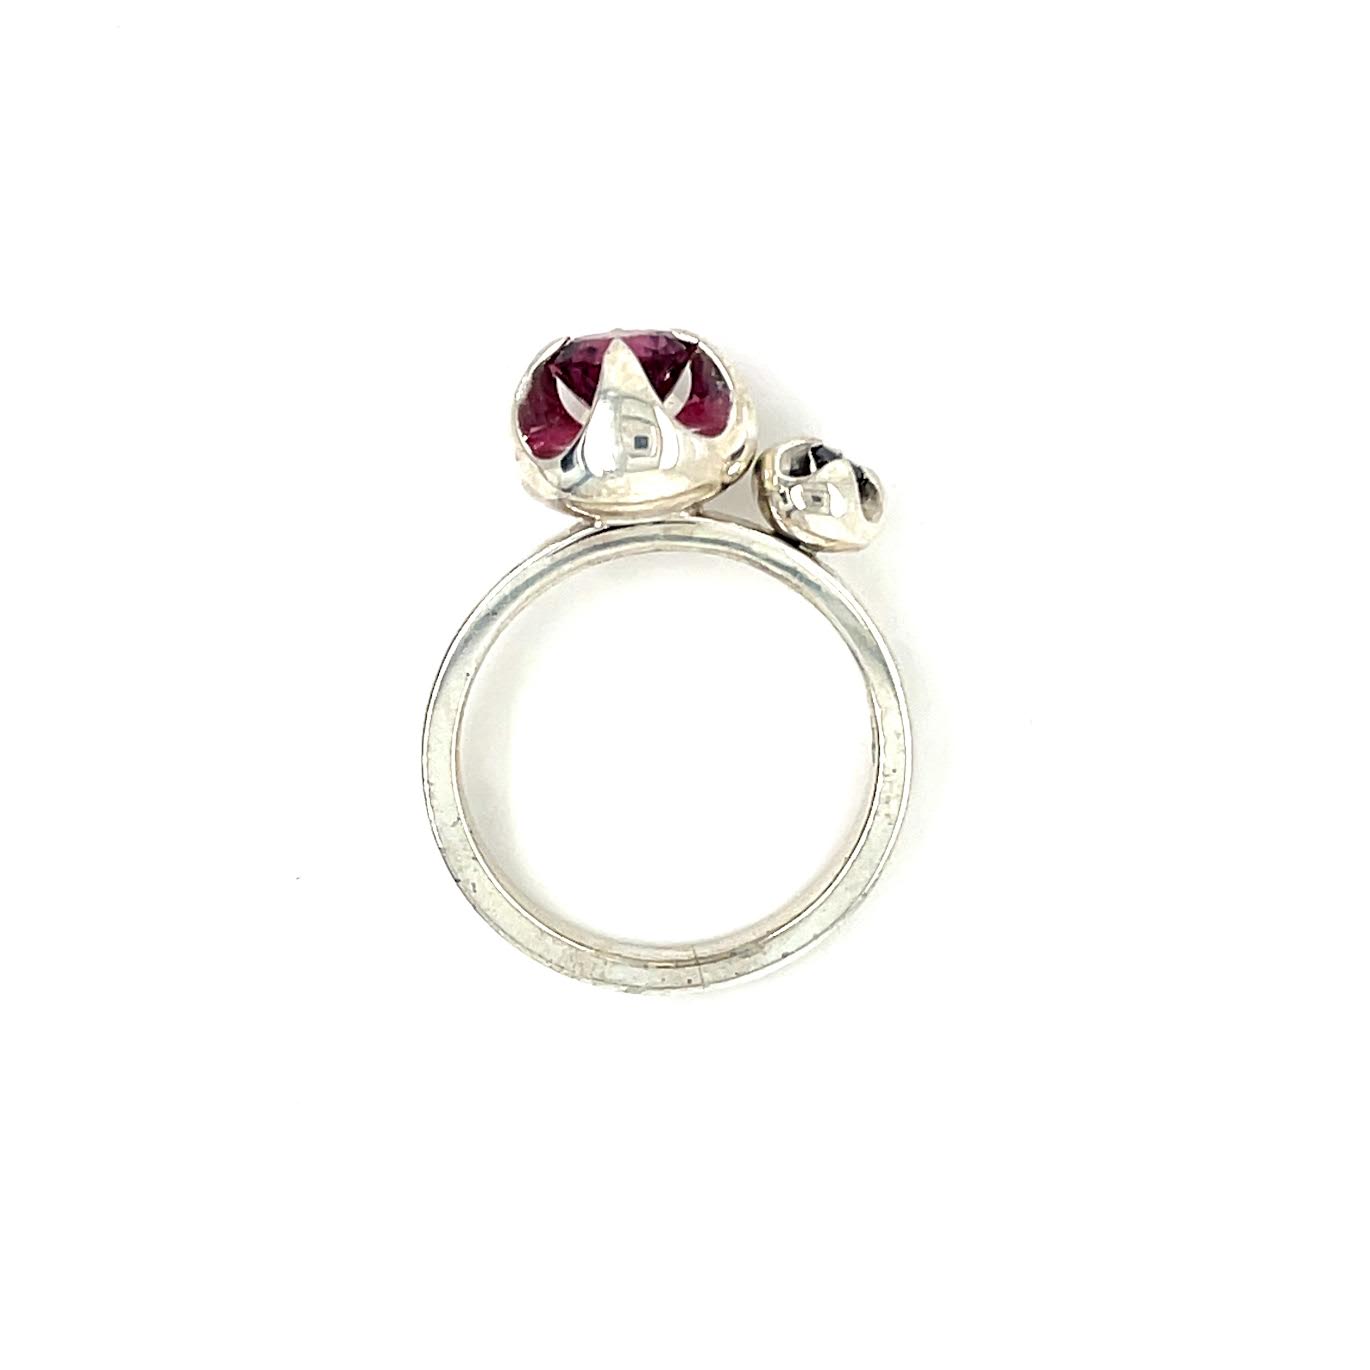 Rhodolite pink garnet and black diamond ring.